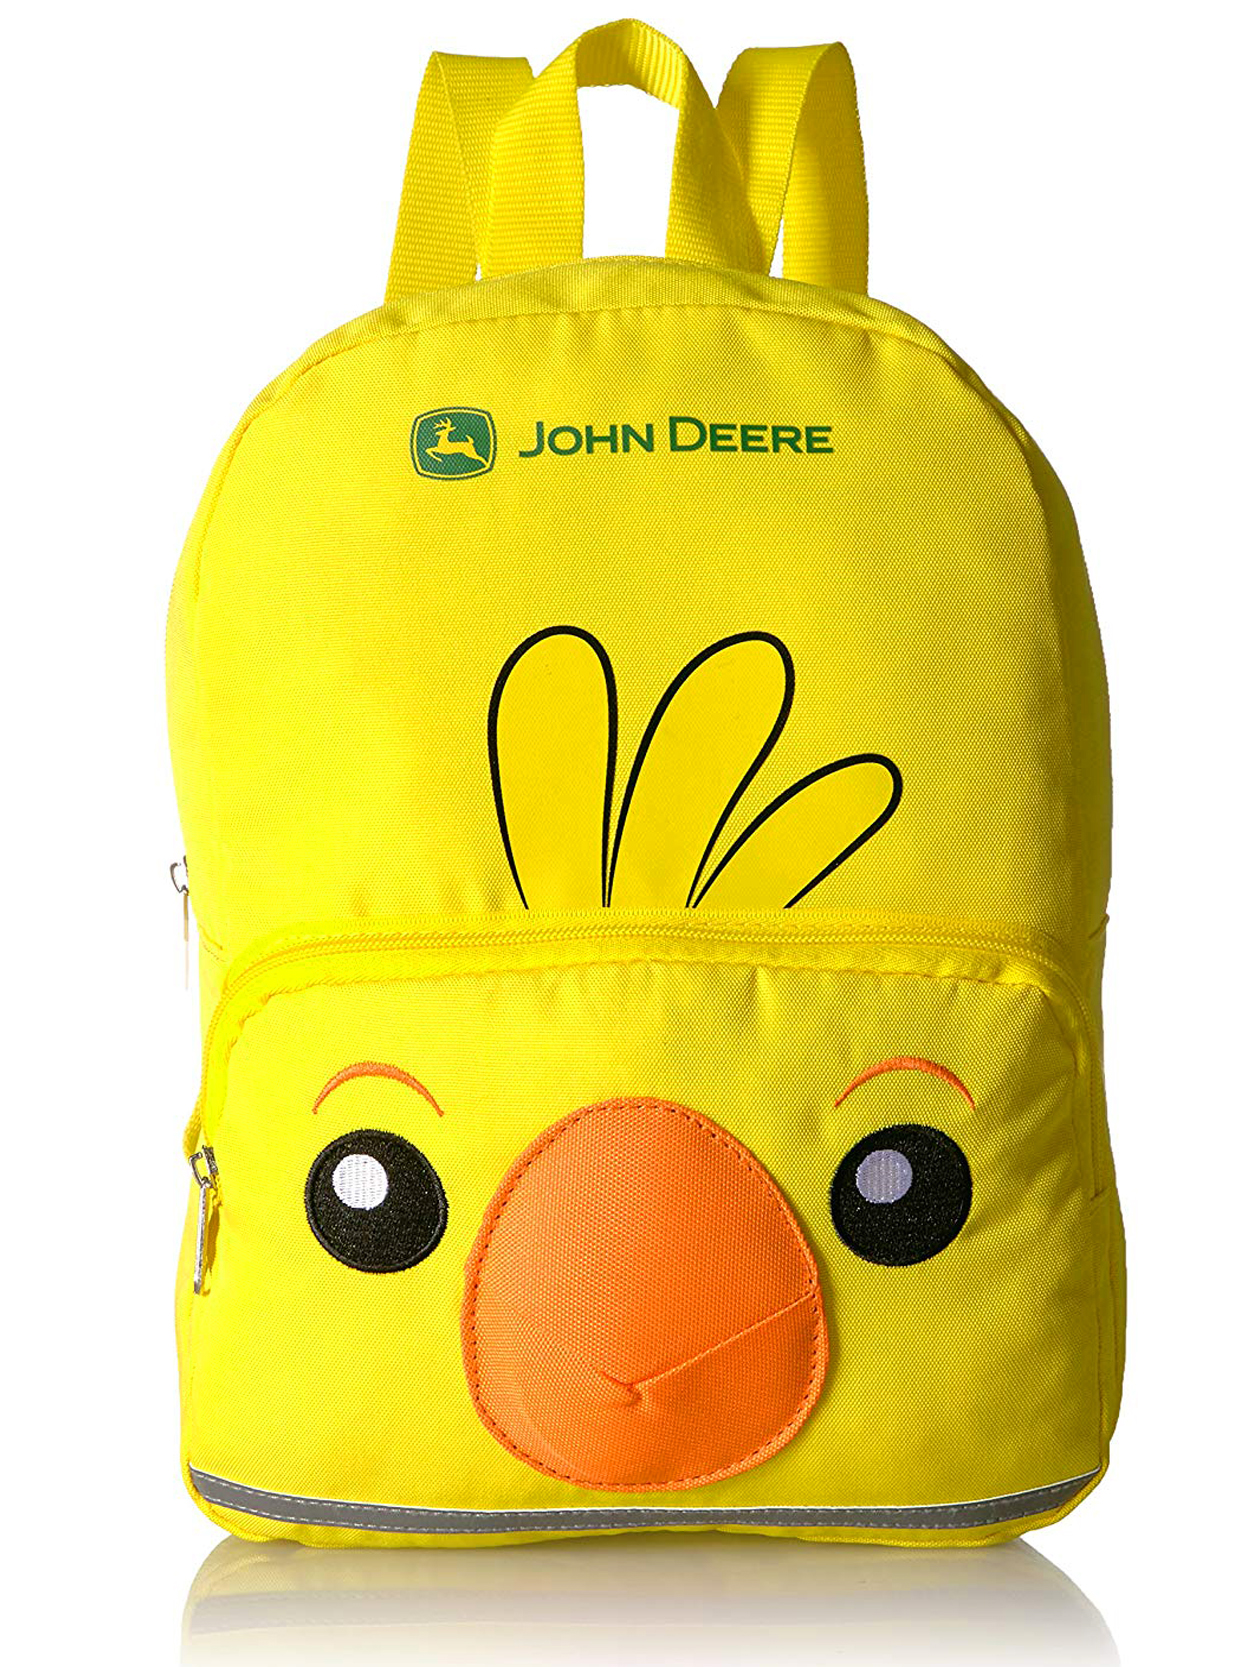 John Deere Chick Toddler 13 inch Yellow Mini Backpack JFL869YT - image 1 of 5